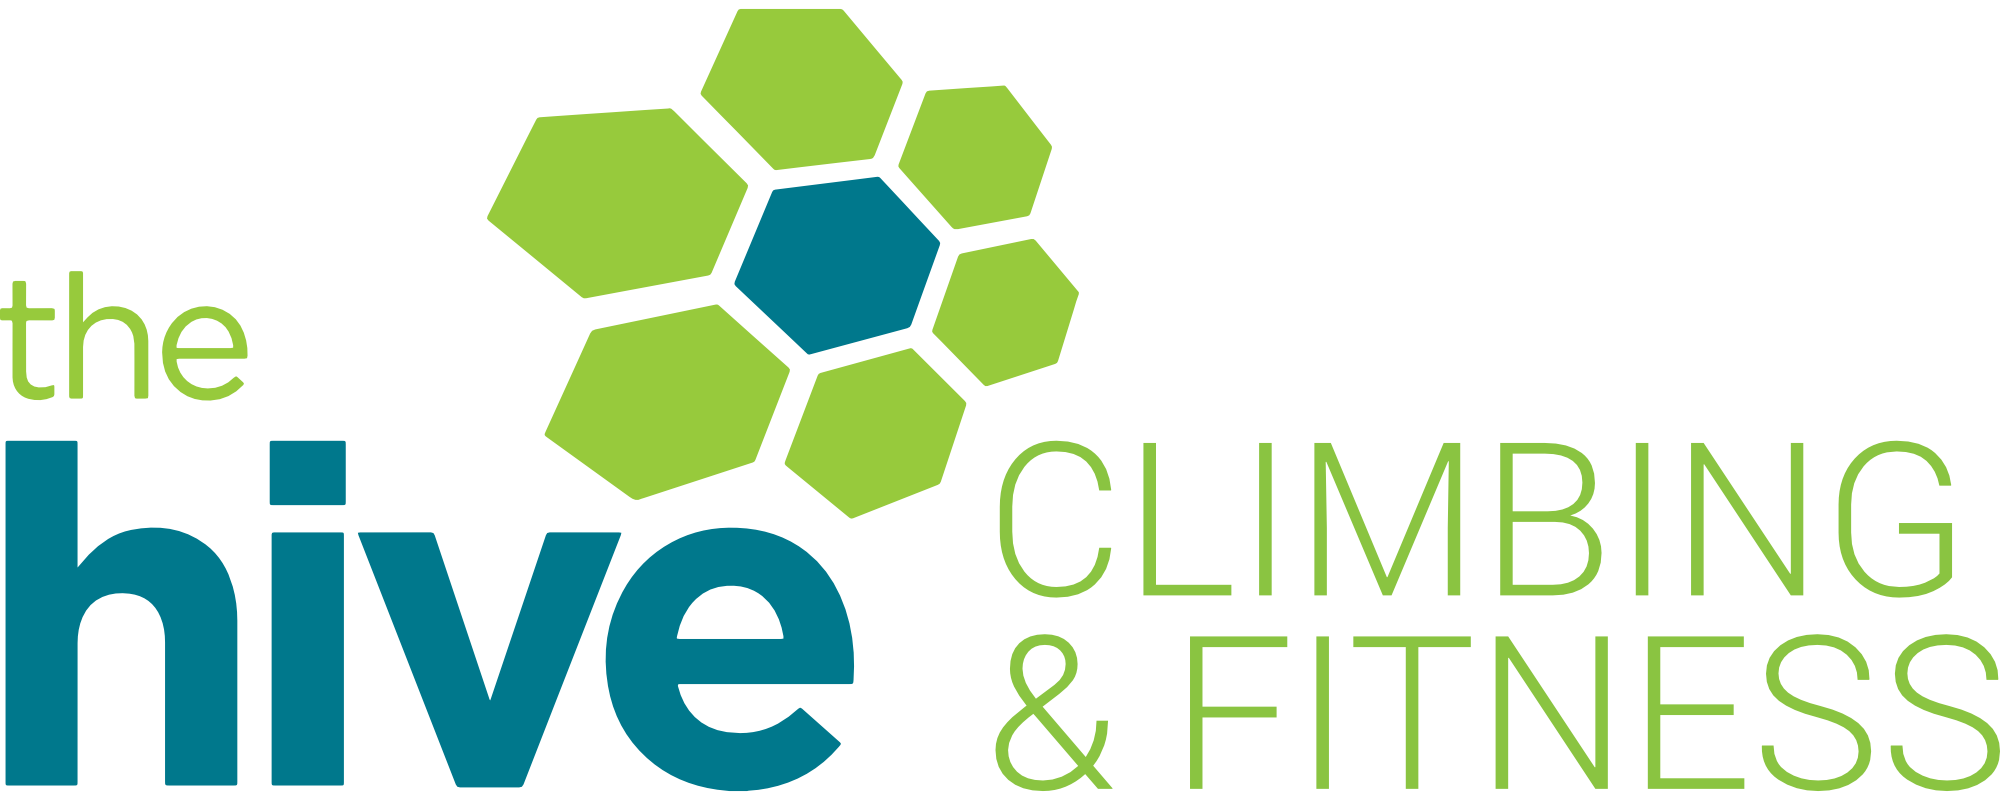 The Hive Climbing & Fitness - Logo